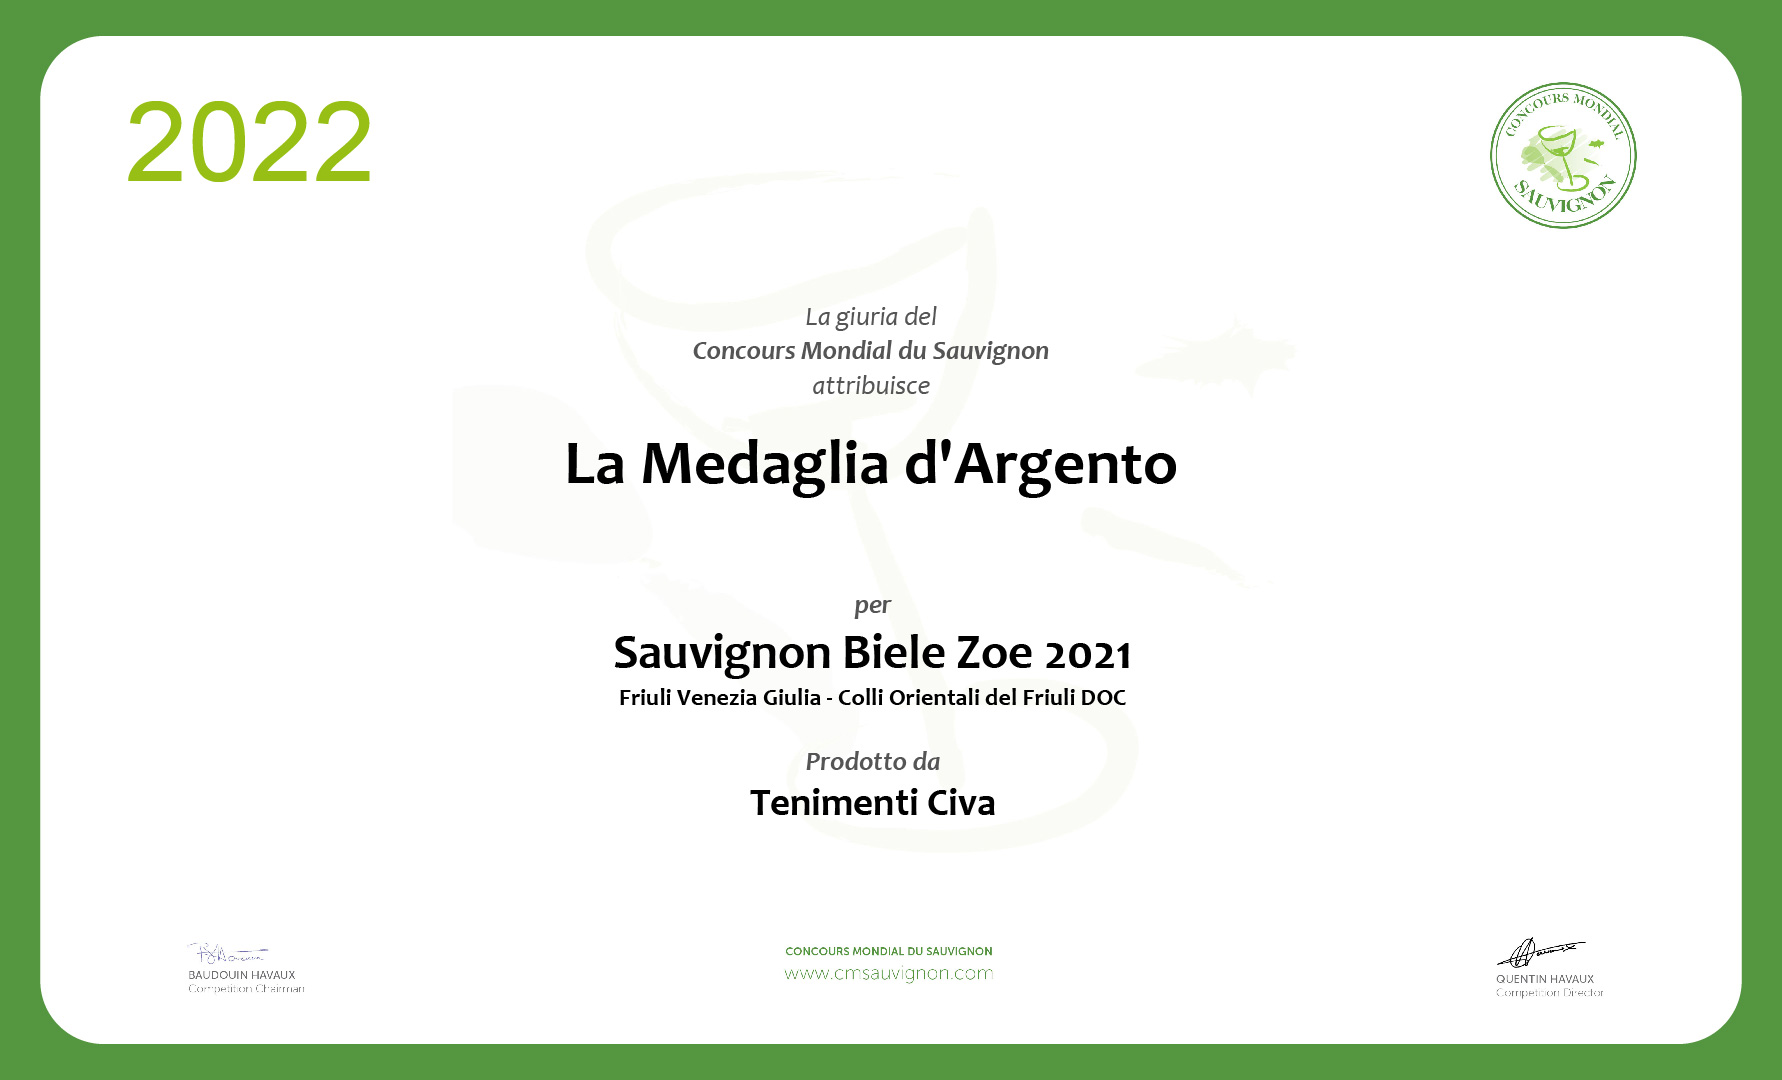 Sauvignon Biele Zôe reconfirms its champion status with a silver medal at the Concours Mondial du Sauvignon 2022